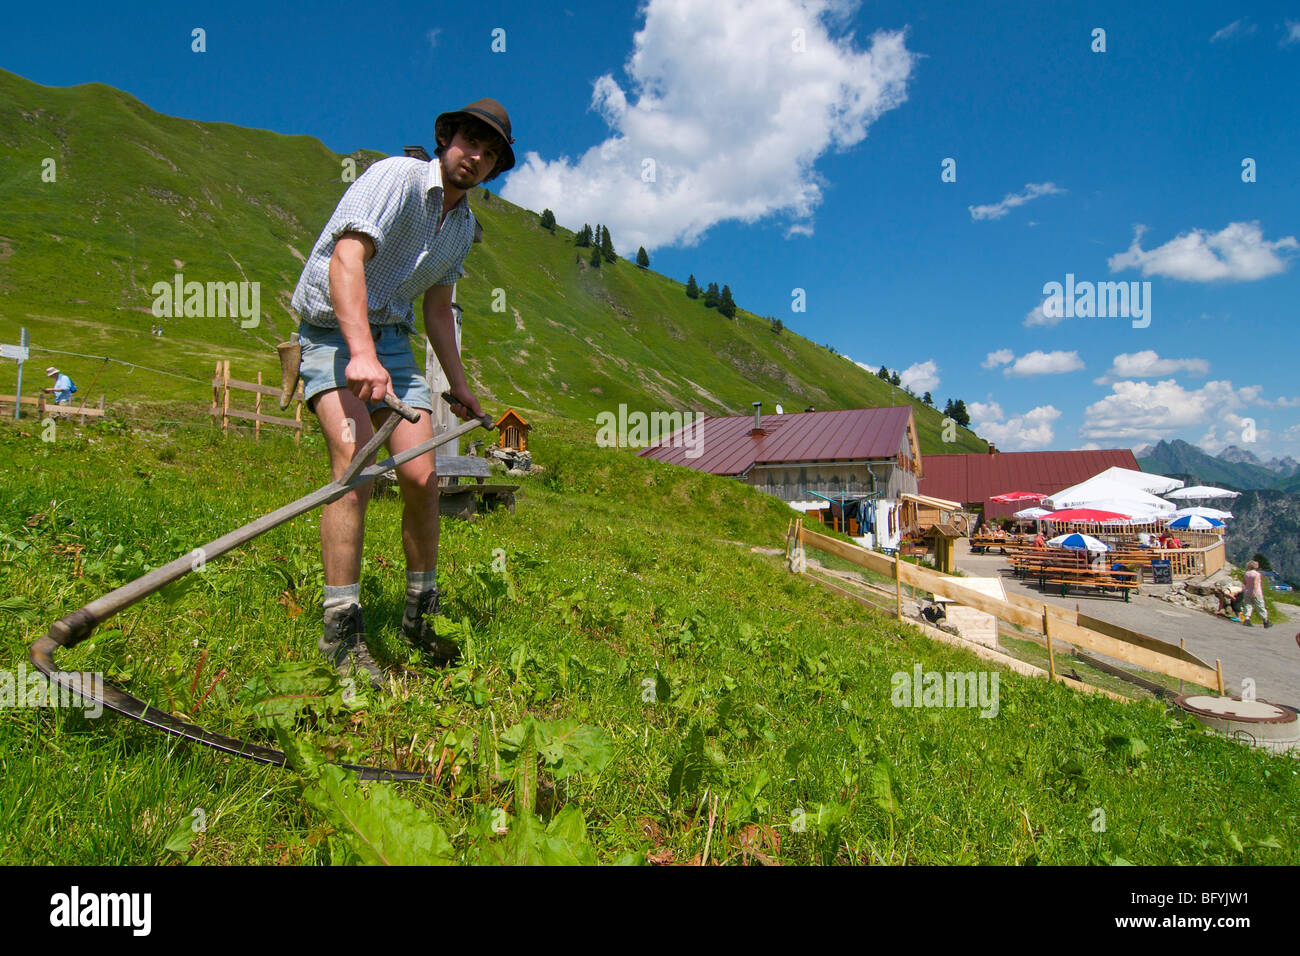 Senn, an alpine dairyman on Schlappoltalm, alpine meadow on Fellhorn Mountain, Oberstdorf, Allgaeu, Bavaria, Germany, Europe Stock Photo